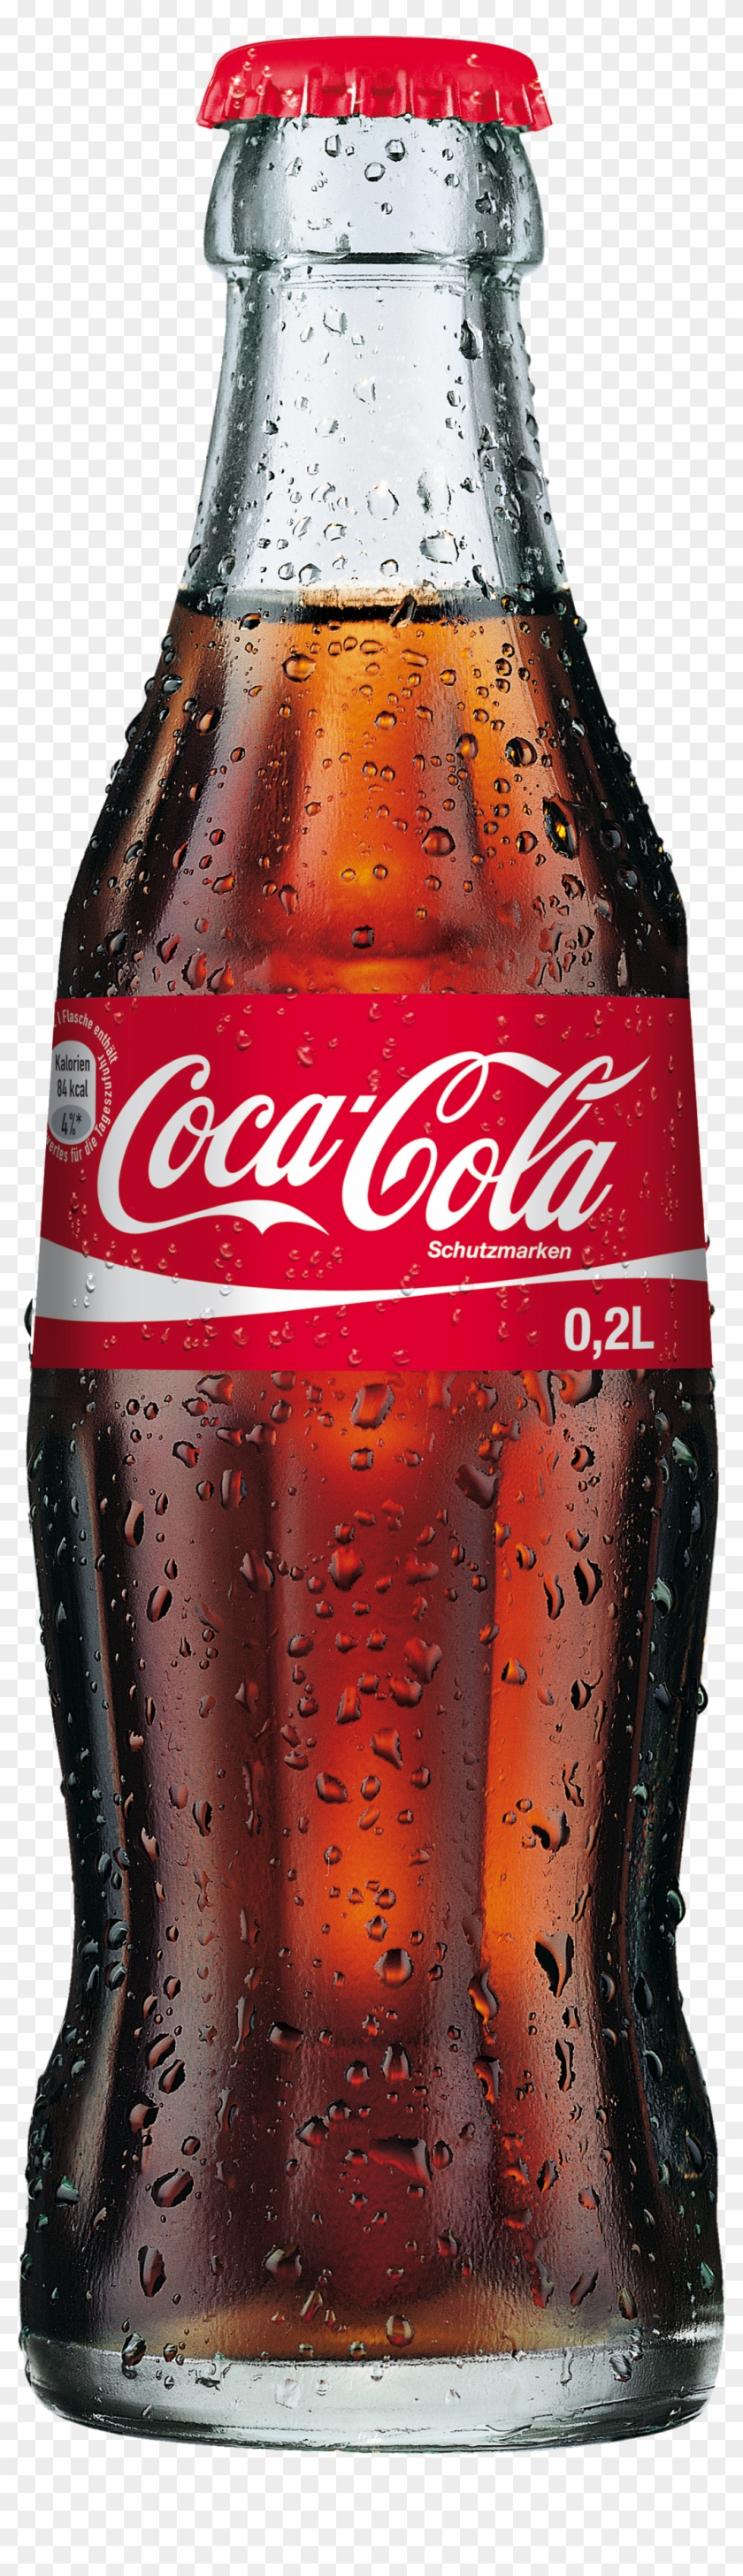 Coca Cola Bottle - Coca Cola Bottle Cartoon Clipart #2072554